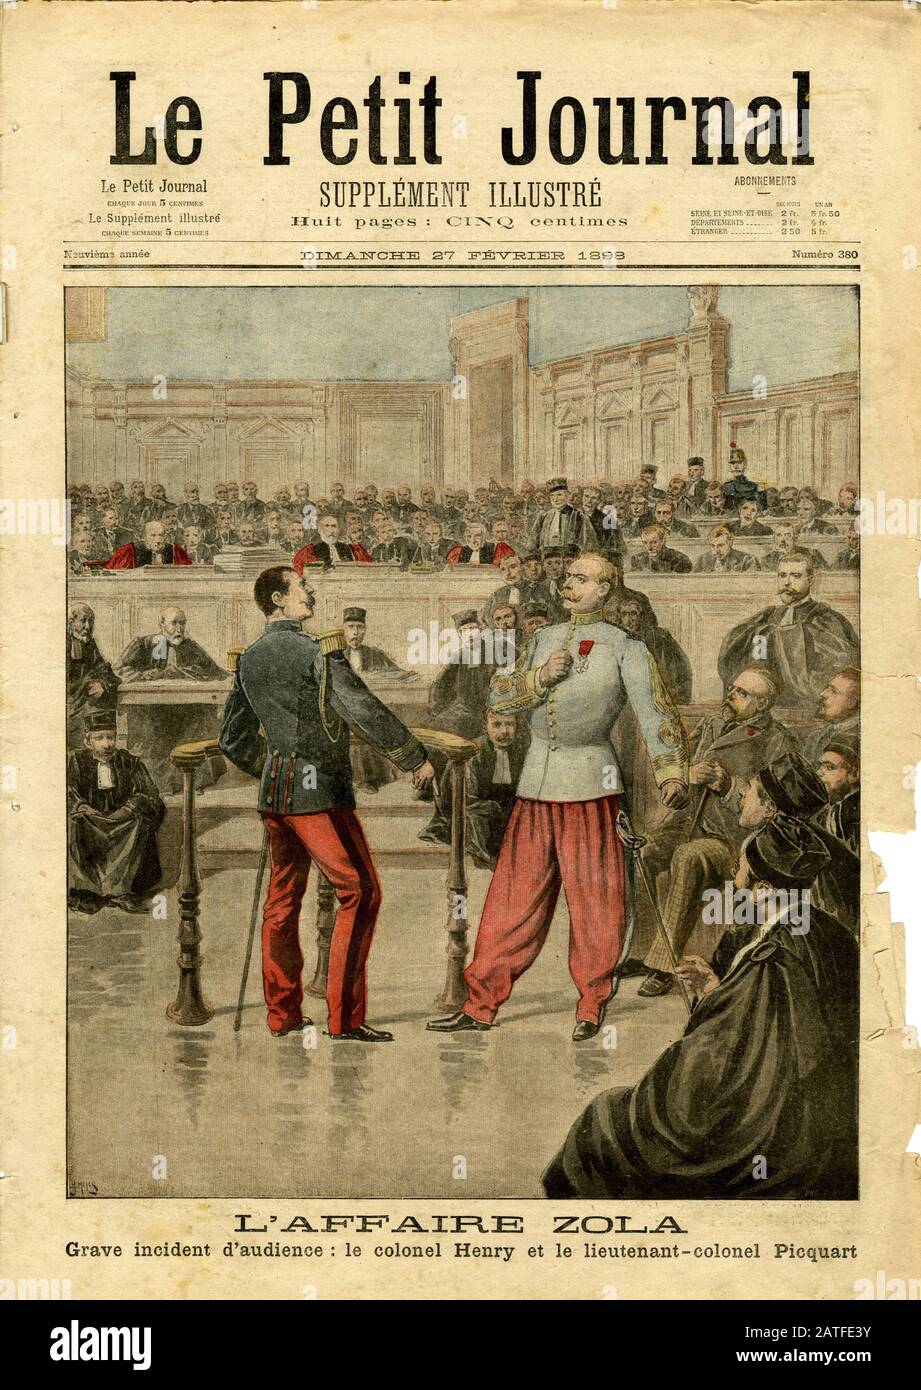 L'affaire Zola - Colonel Henry et Lieutenant-Colonel Picquart - The Dreyfus Affair 1894-1906 - Petit Journal 2/27/1898 - French illustrated newspaper Stock Photo